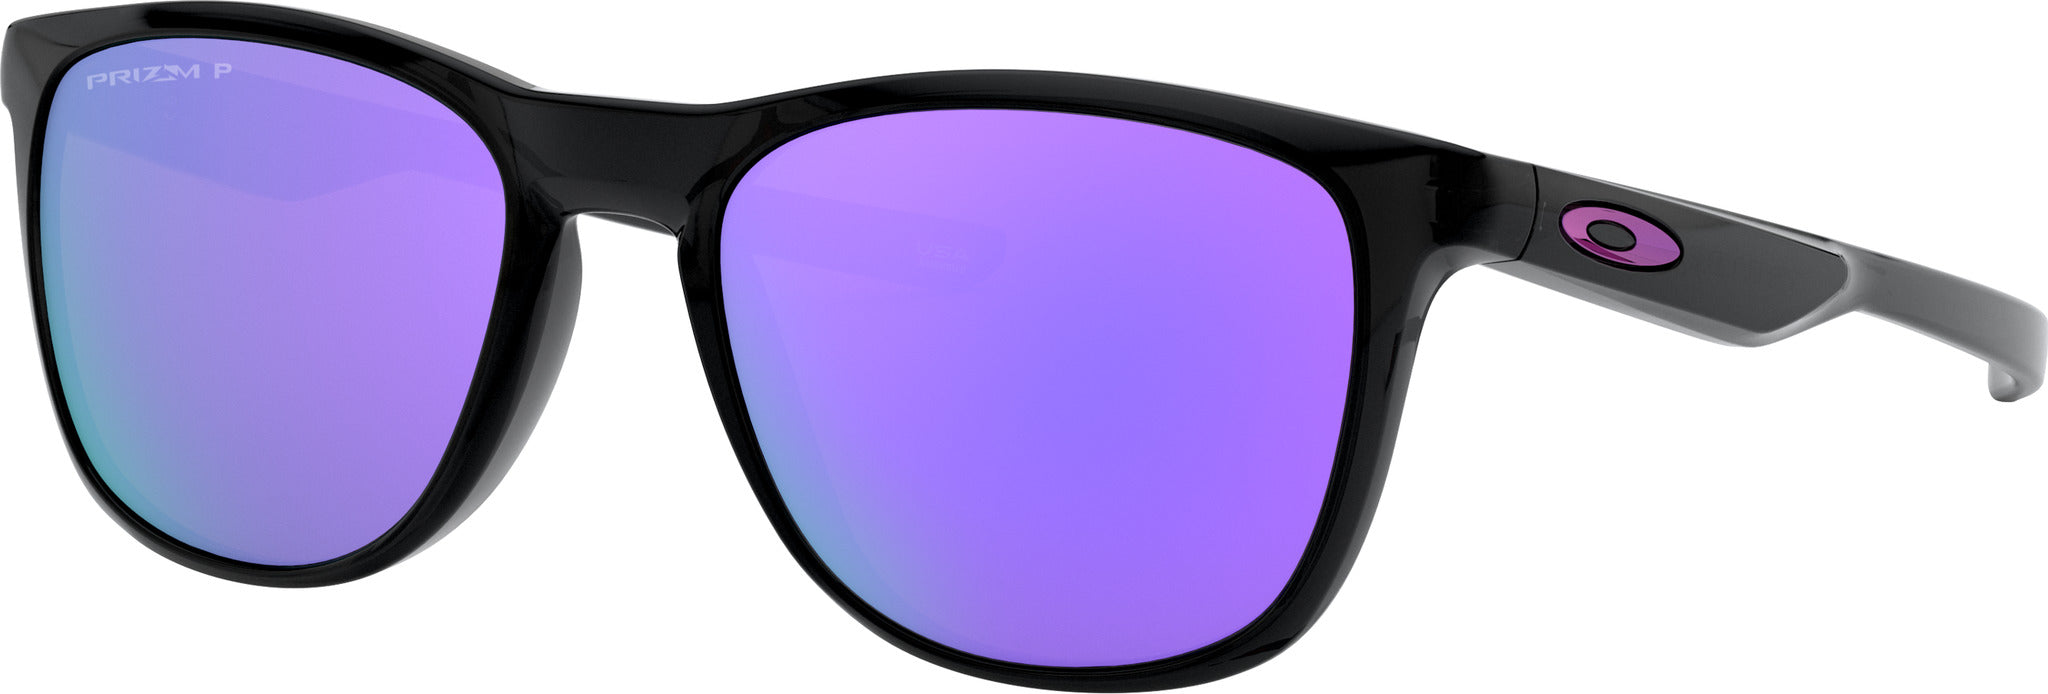 oakley violet iridium lens